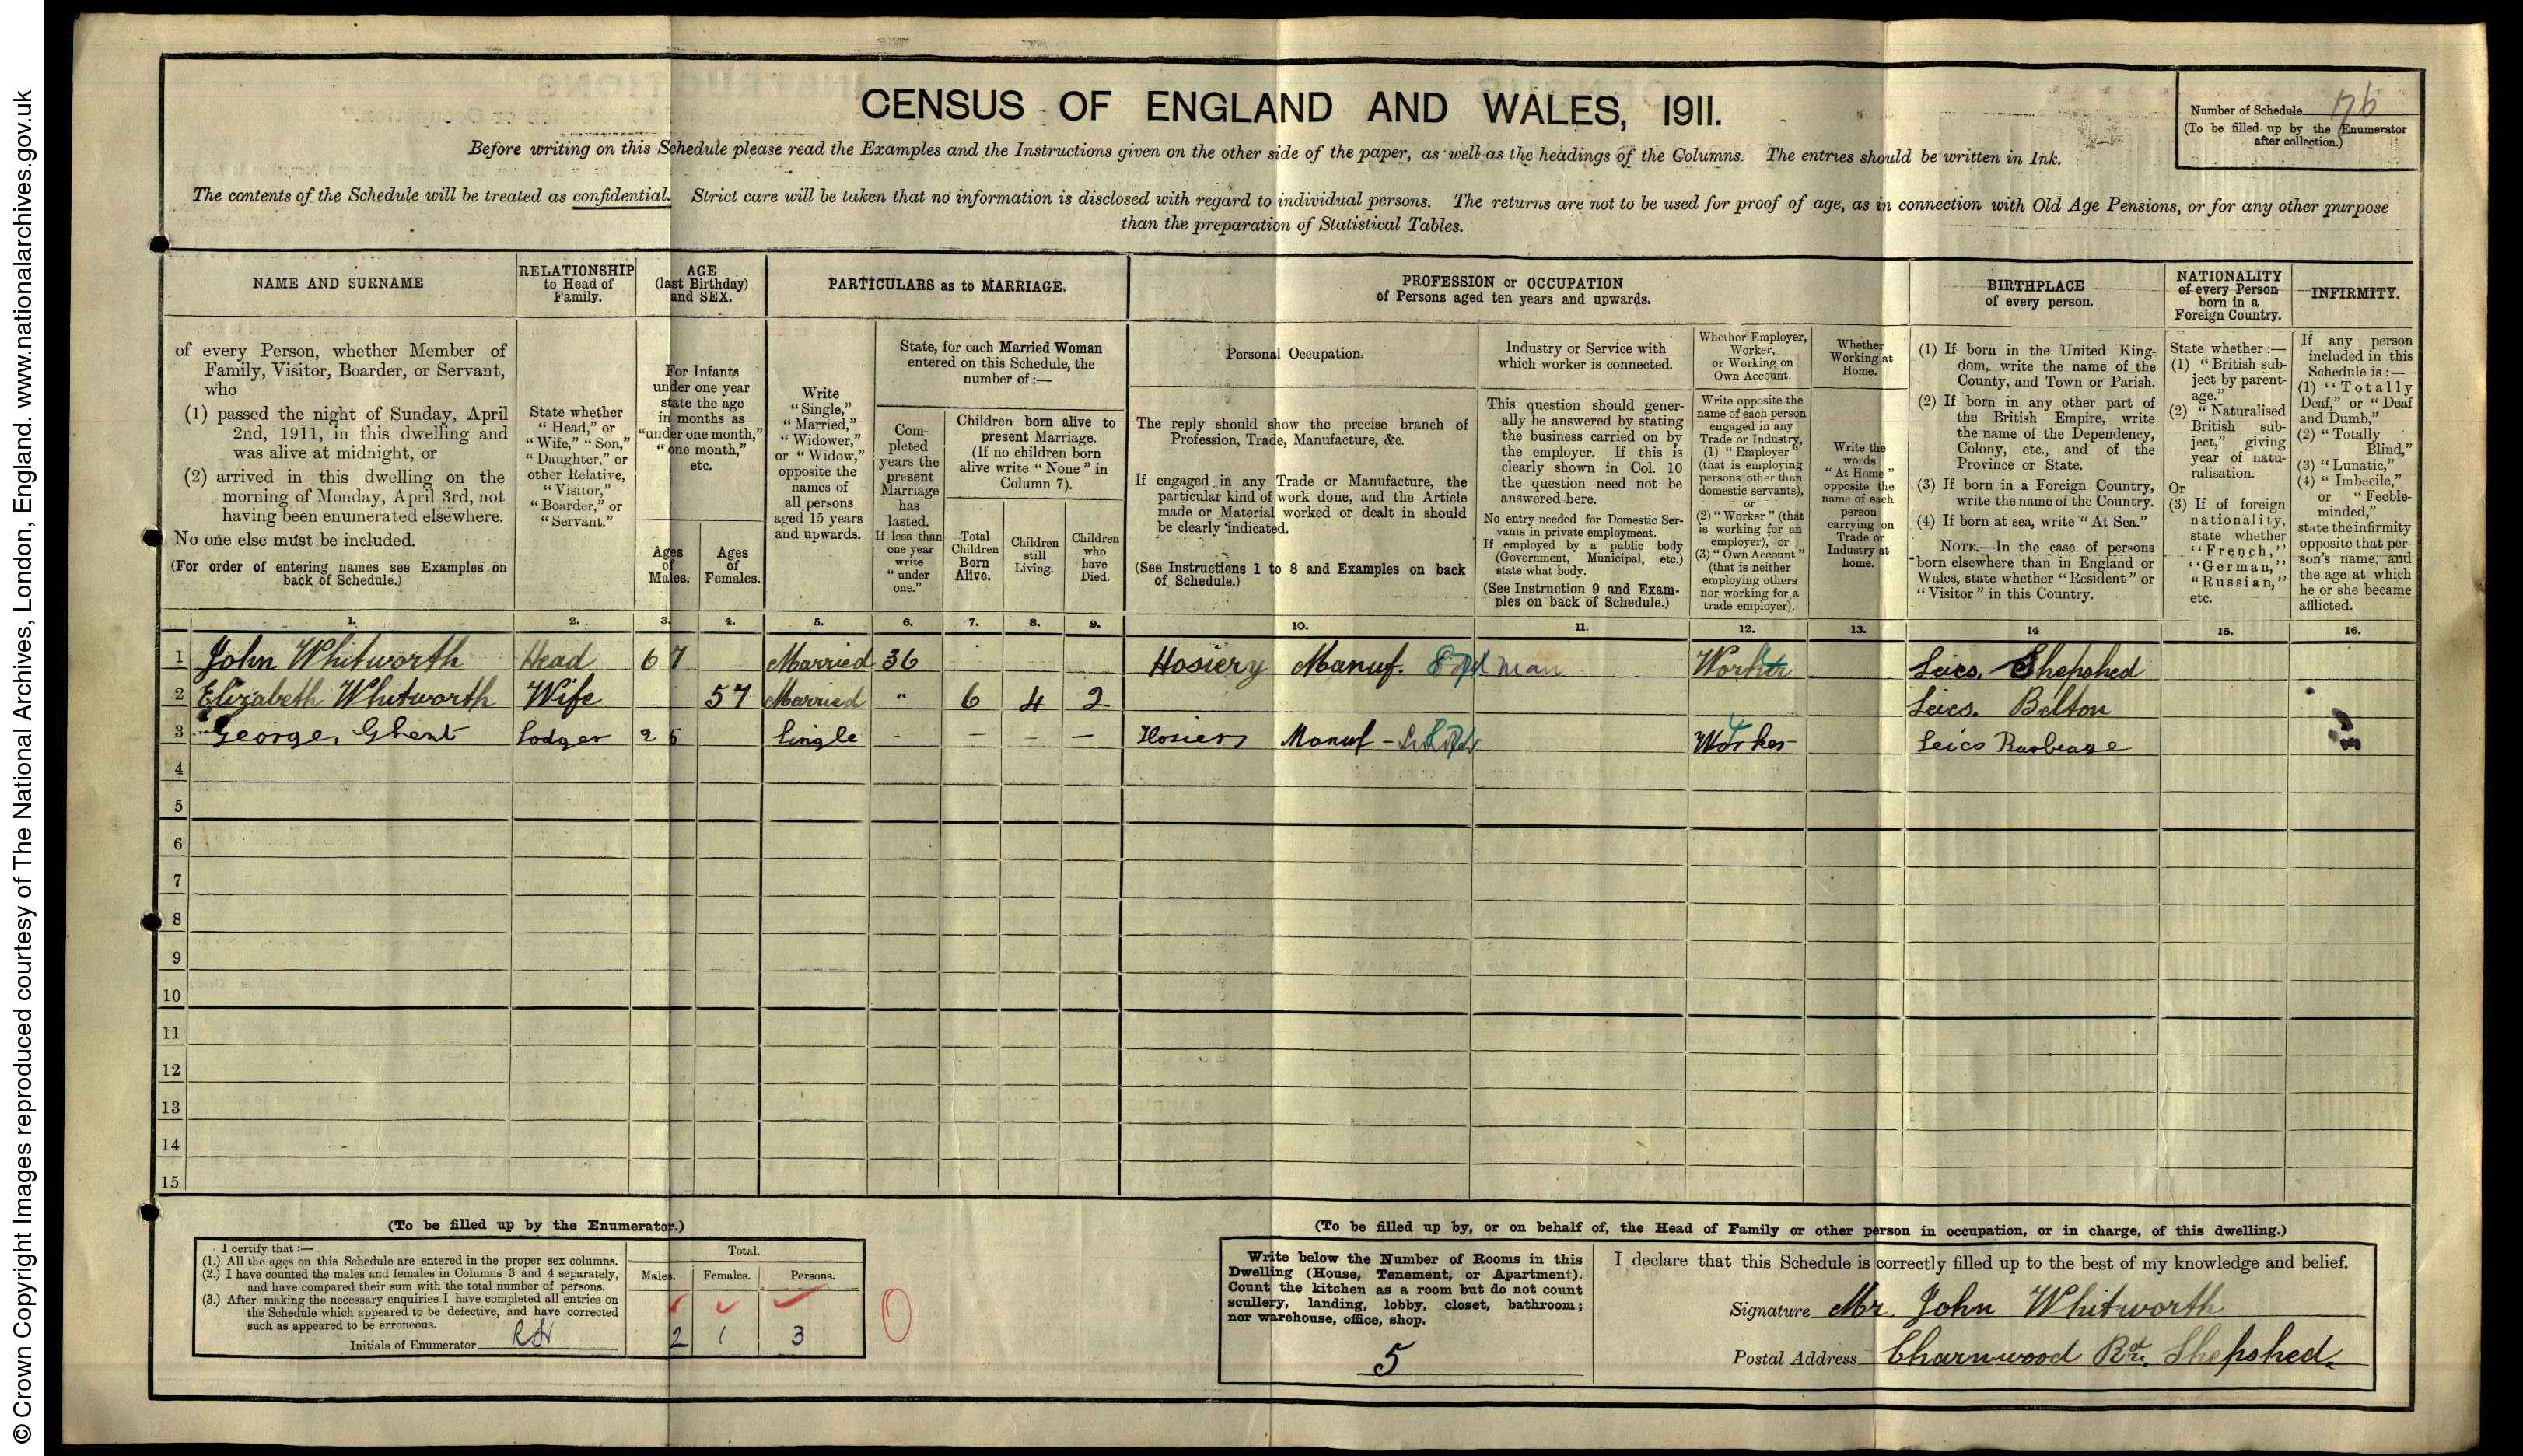 John Whitworth - Elizabeth Hall 1911 Census